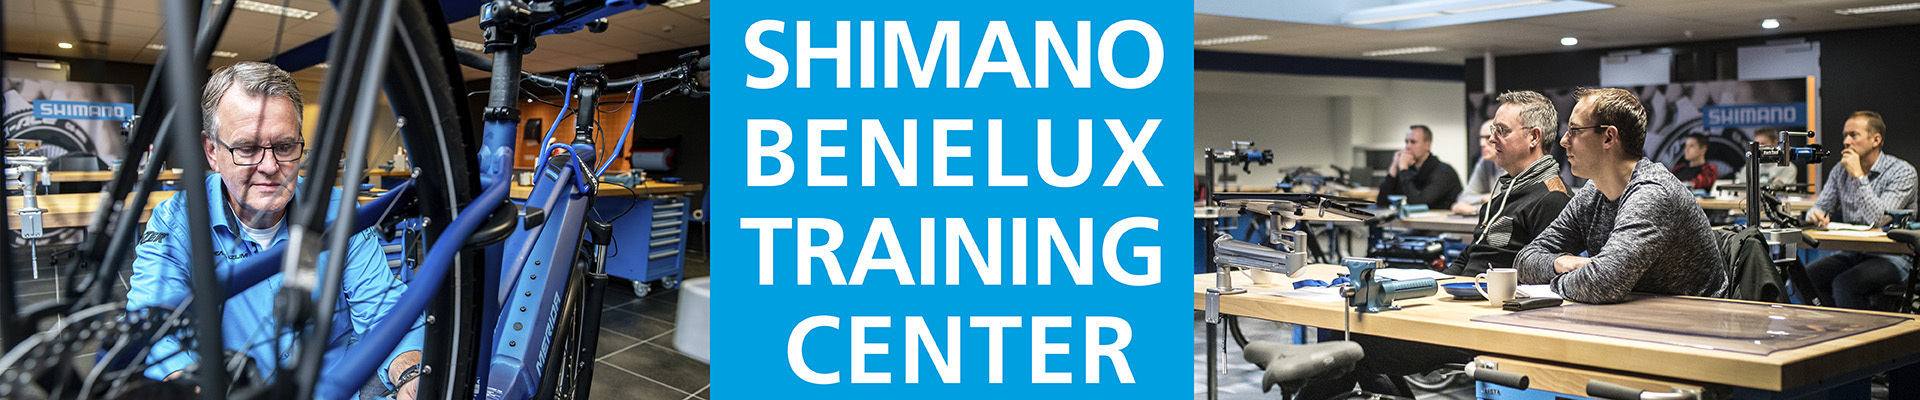 Shimano Benelux Training Center 2021 - 2022